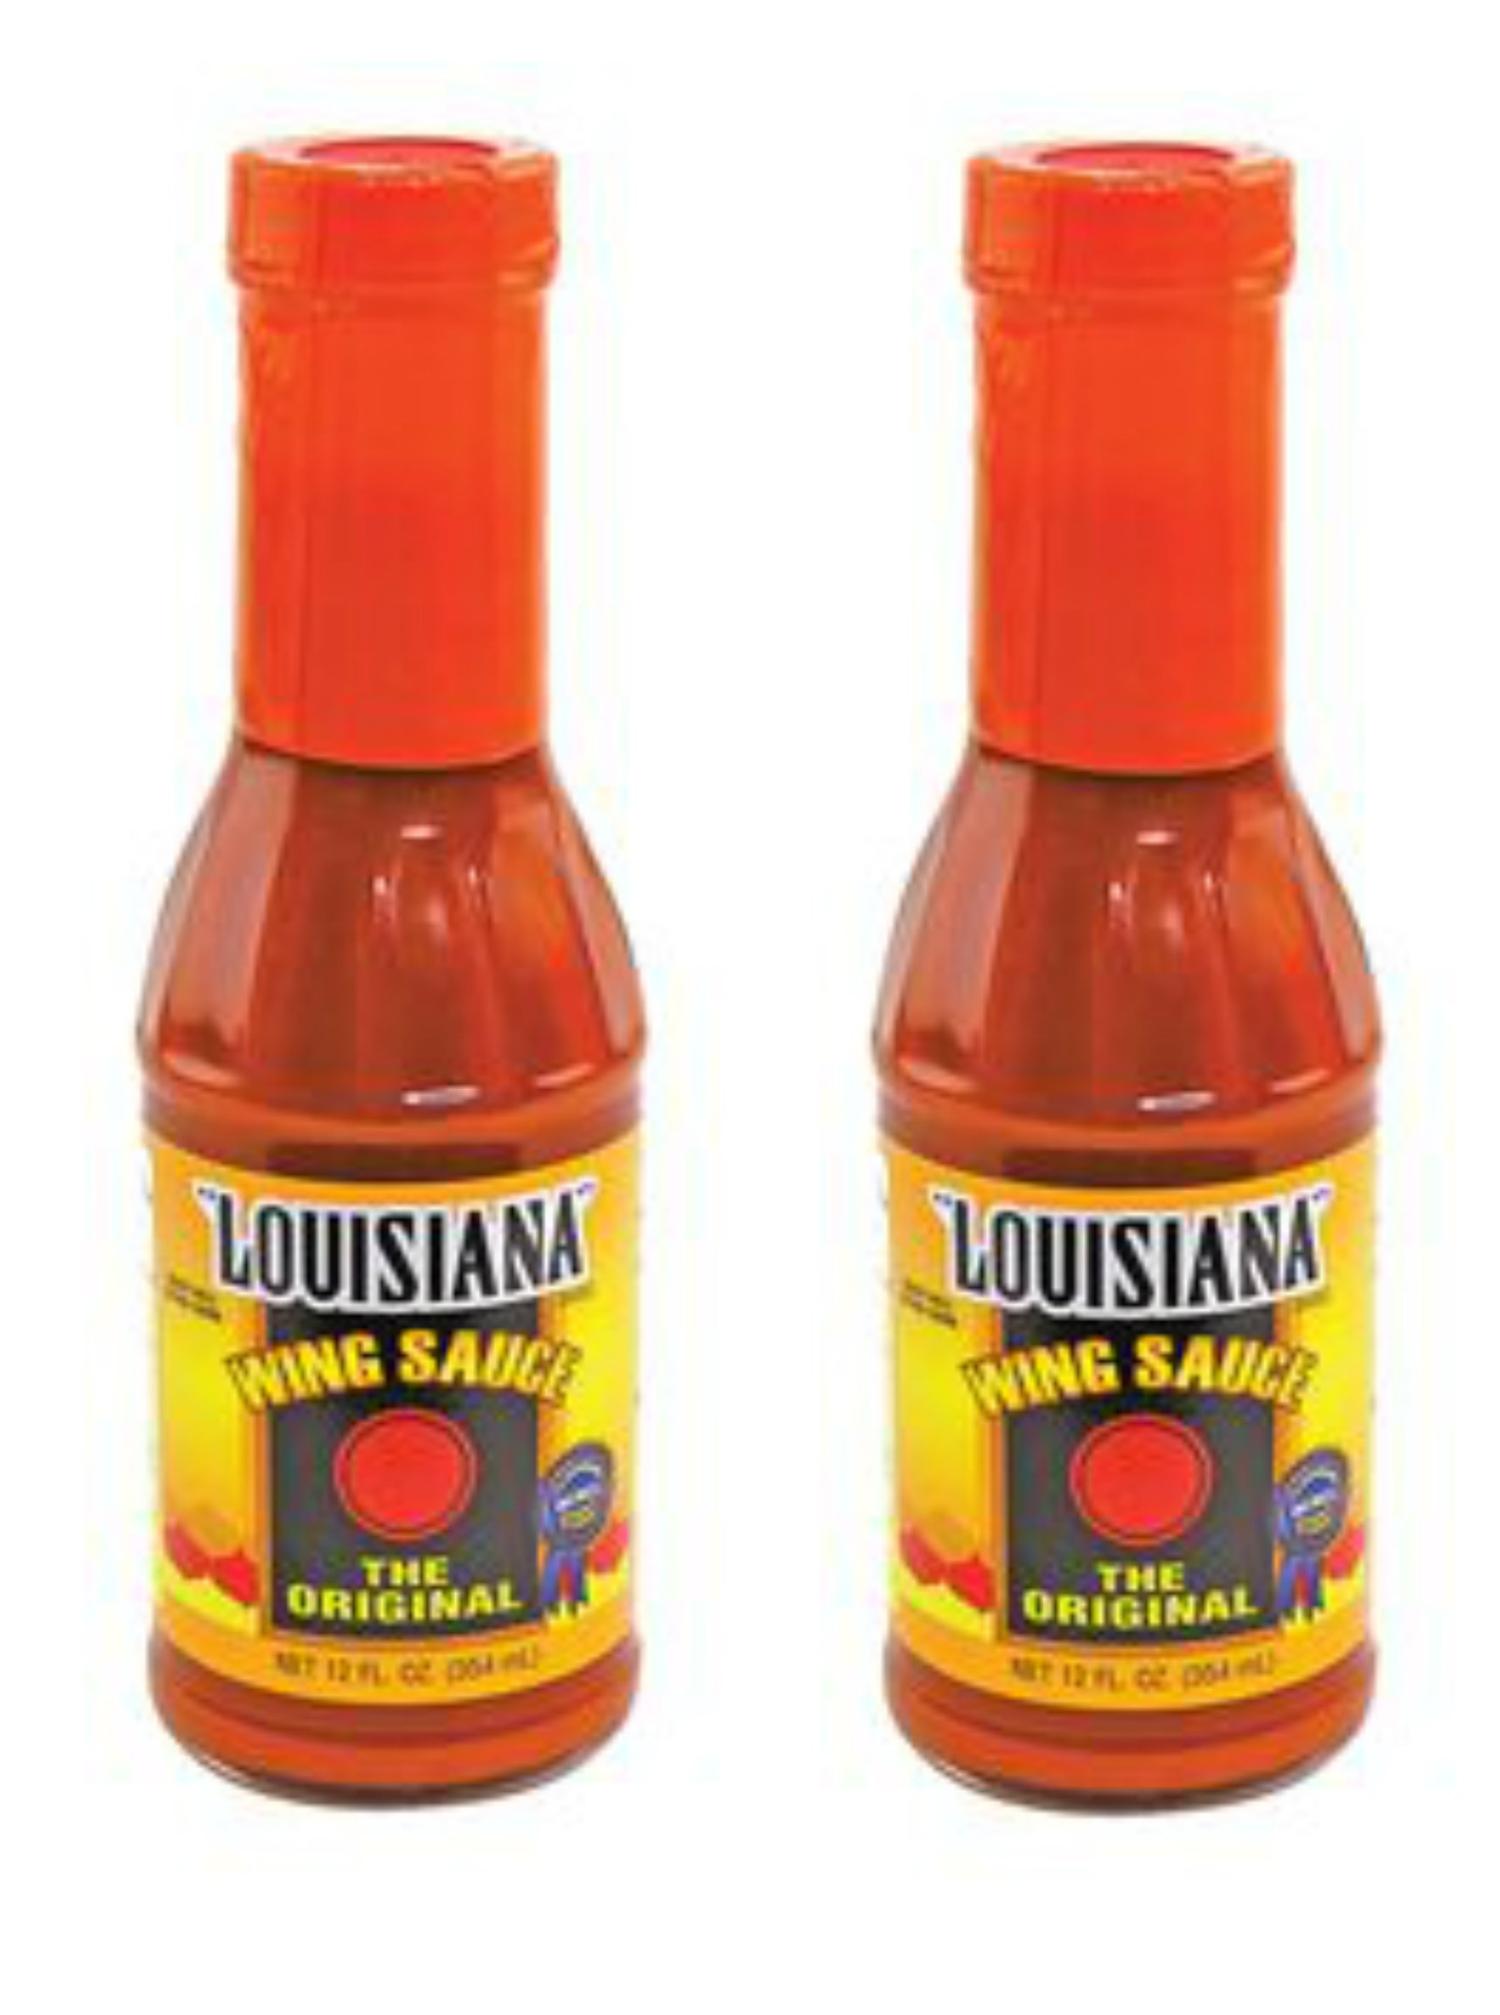 Louisiana Hot Sauce - 12 fl oz bottle